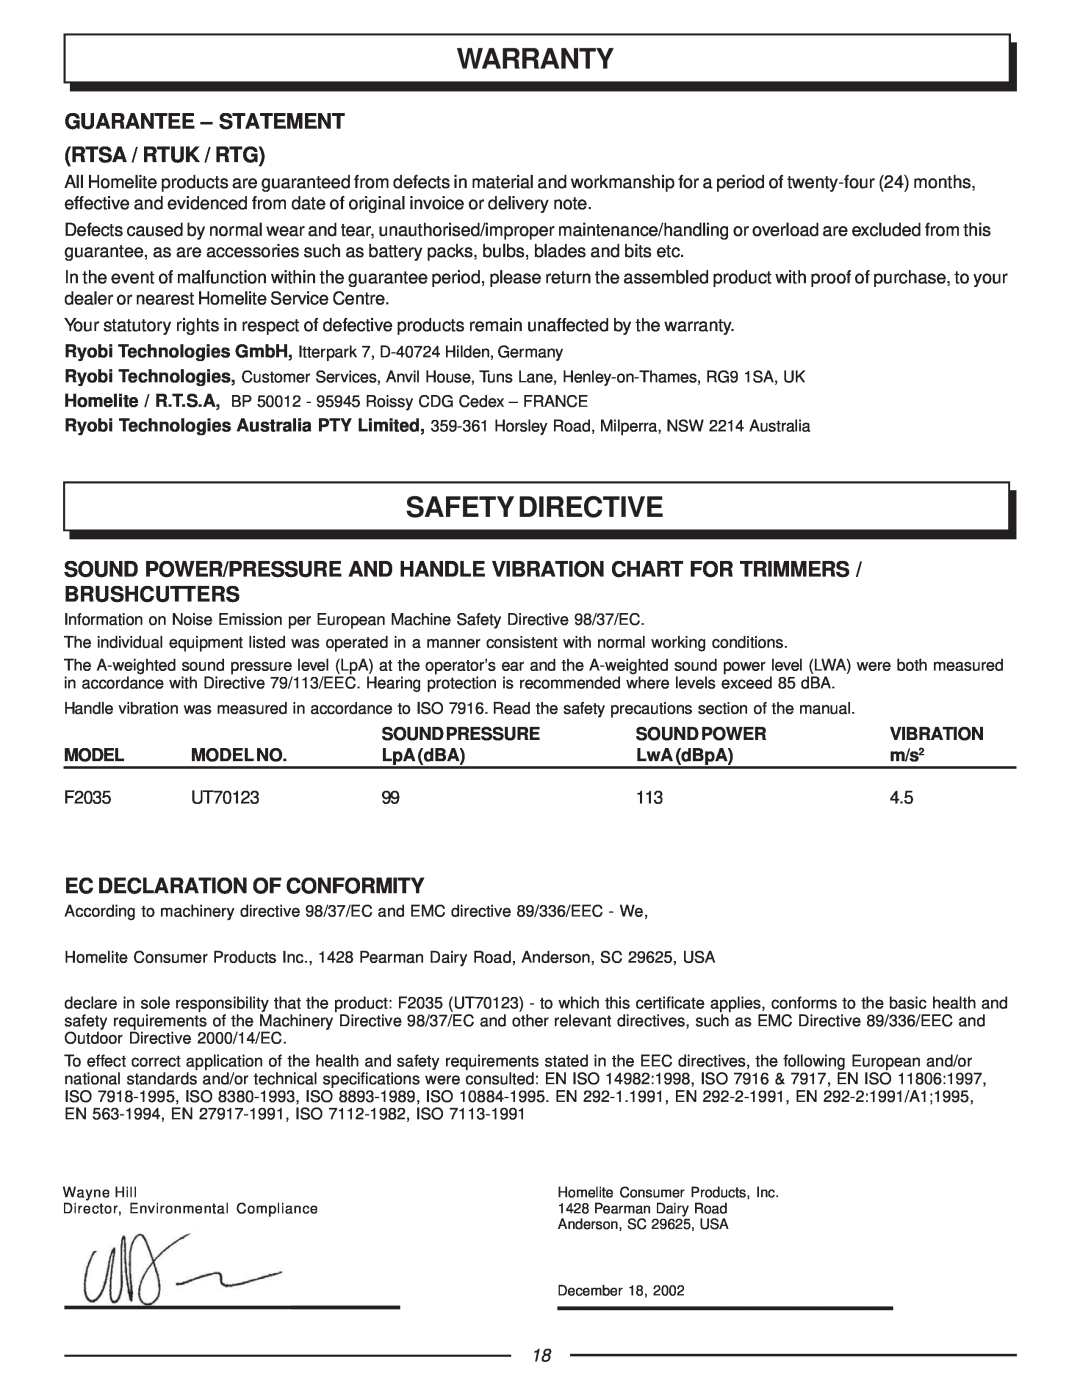 Homelite F2035 Warranty, Safety Directive, Guarantee - Statement Rtsa / Rtuk / Rtg, Ec Declaration Of Conformity, Model 